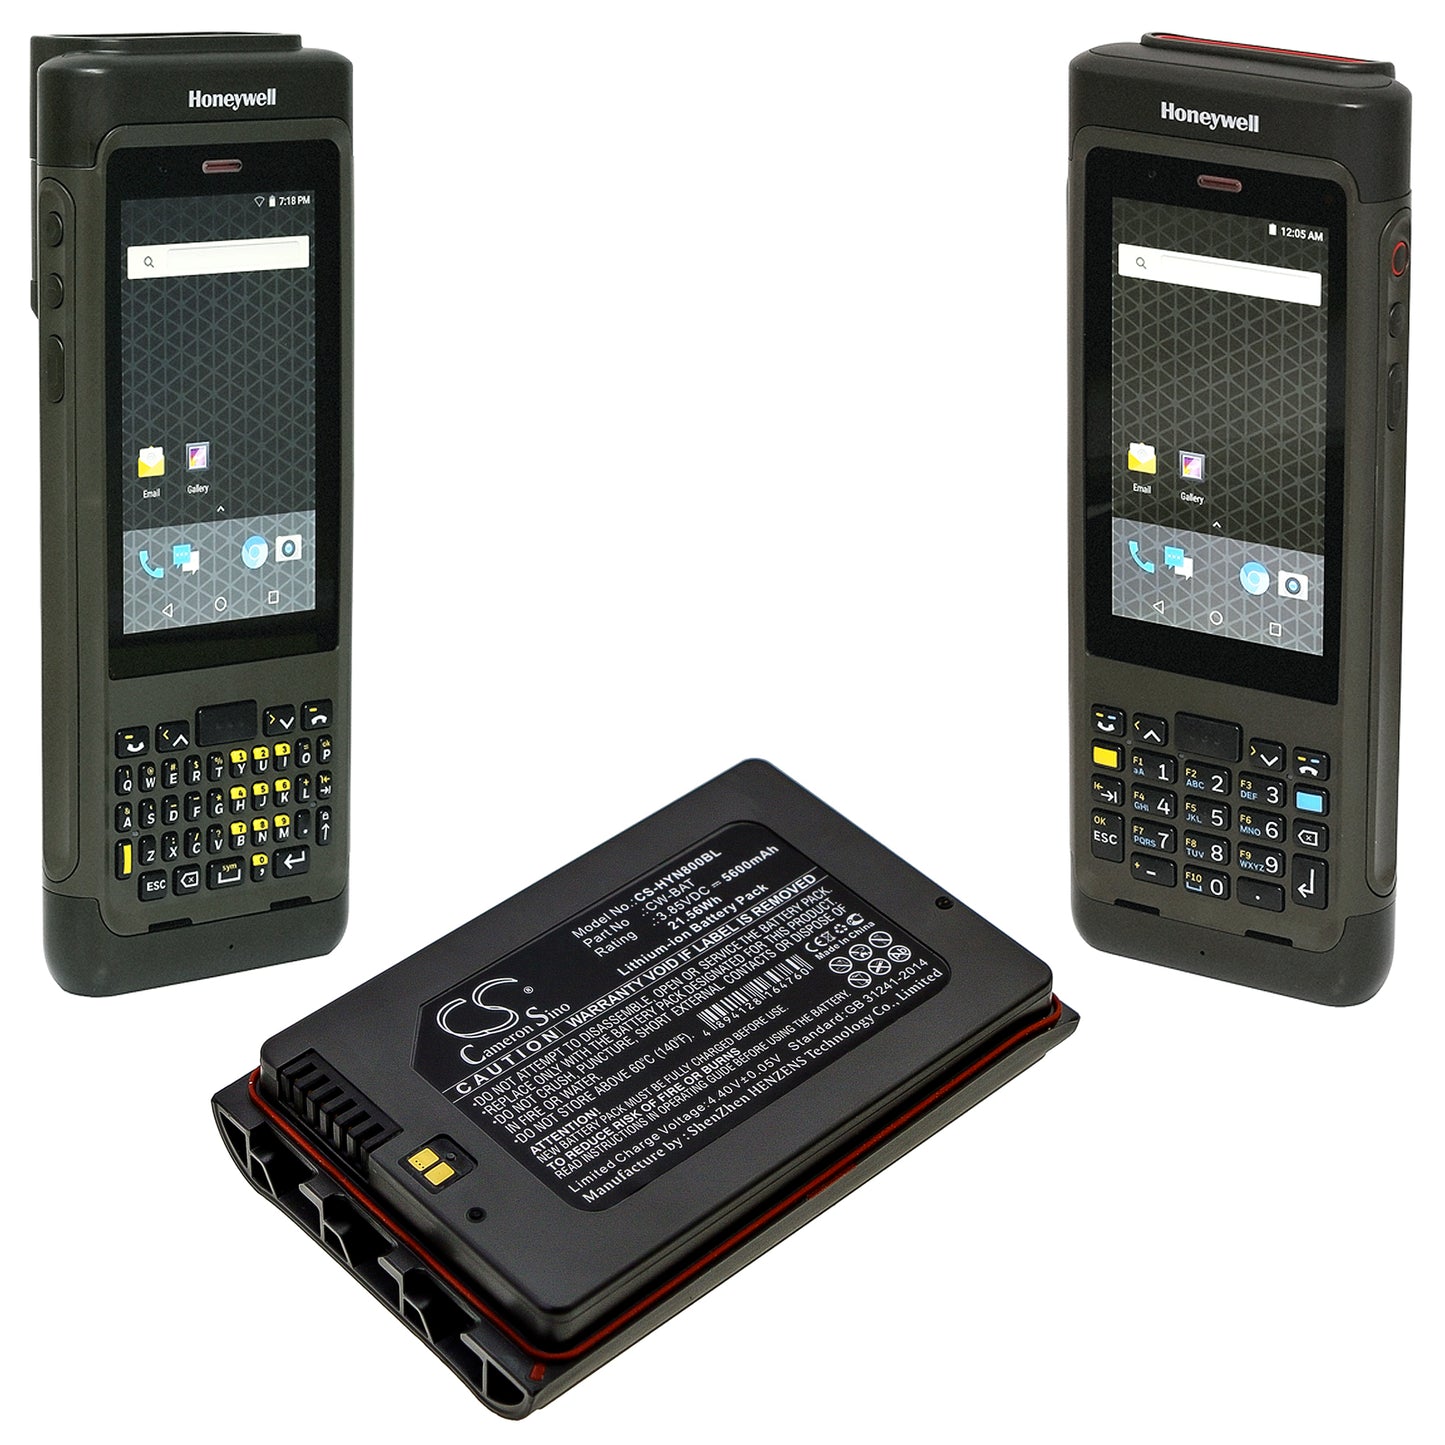 5600mAh 8754-871810-01, CW-BAT, CX80-BAT-EXT-WRLS1 Battery for Dolphin Honeywell CN80-SMAVtronics